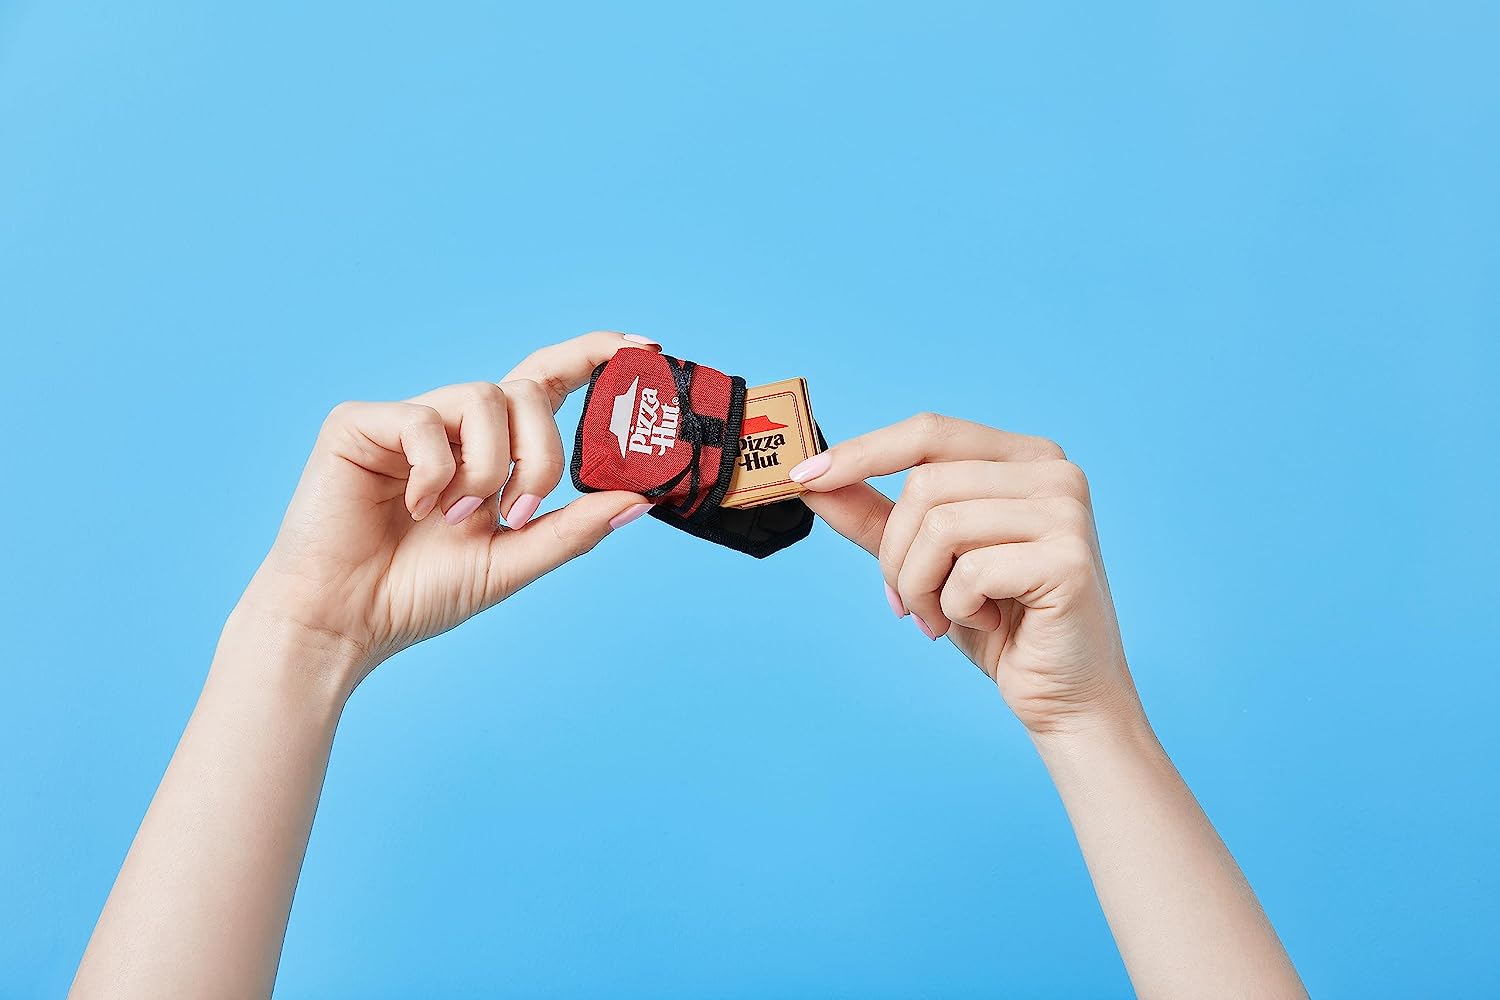 Zuru 5 Surprise Mini Brands Foodie Mini Food Court - Shop Playsets